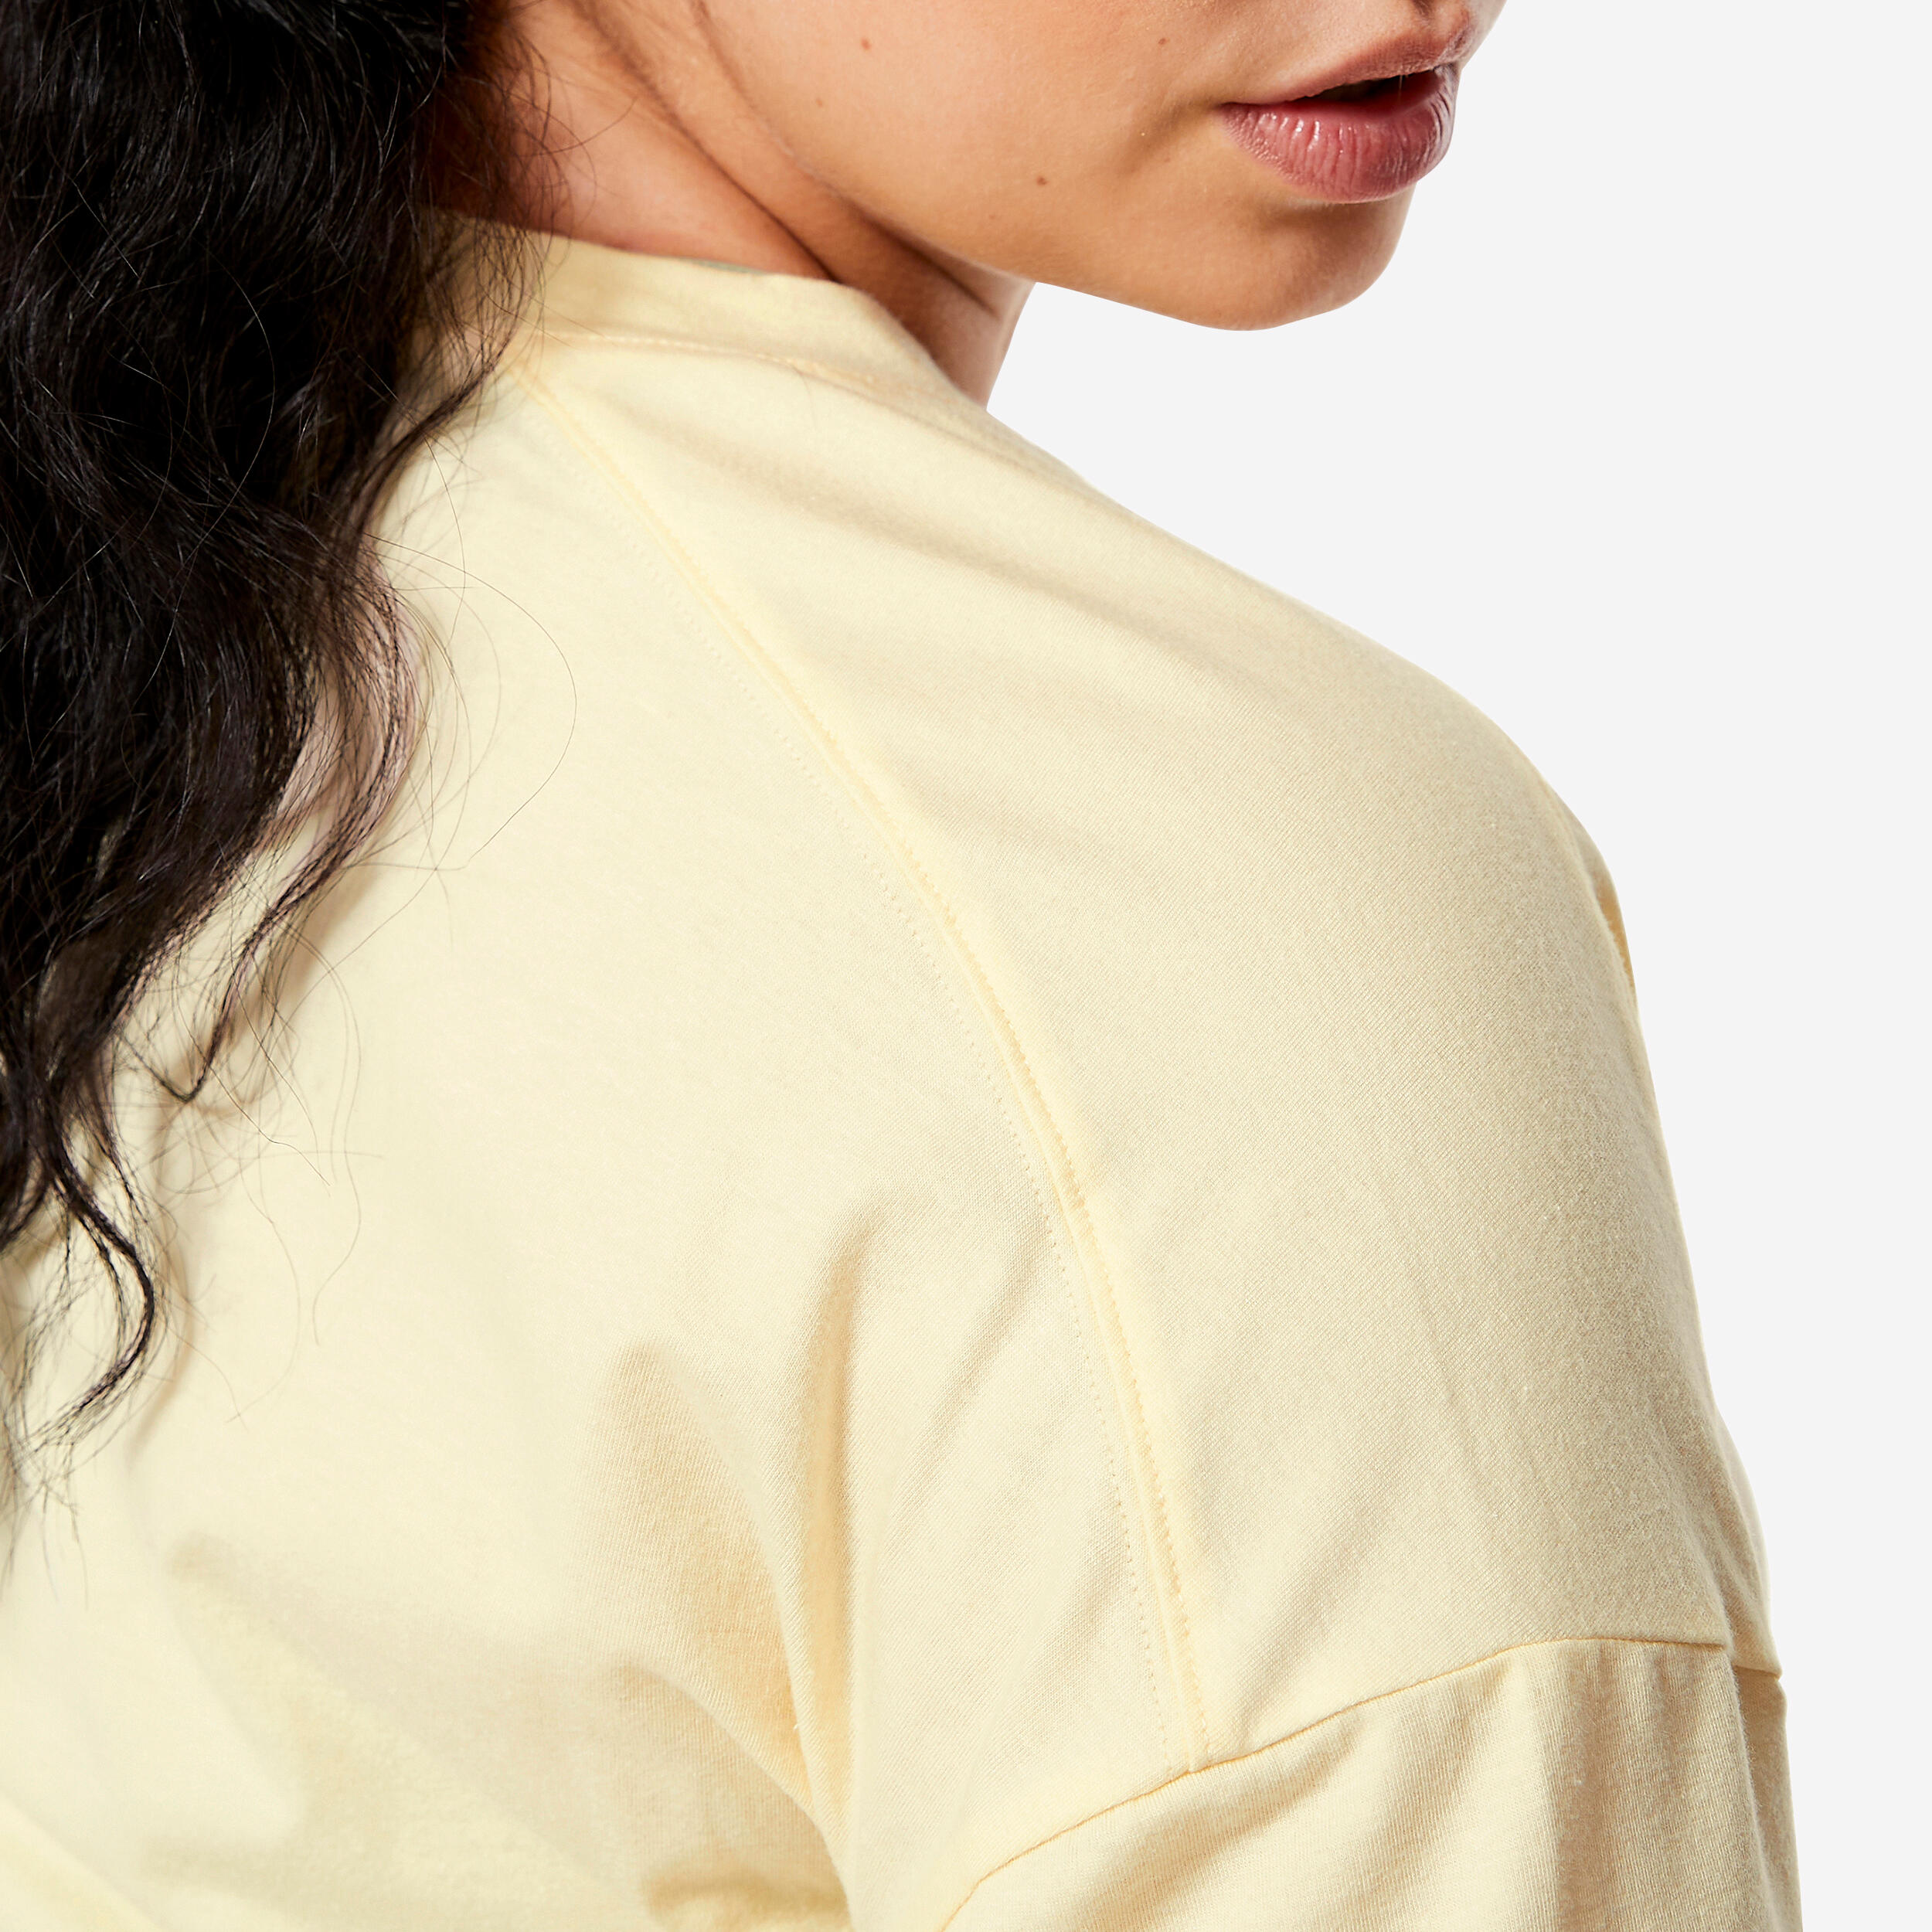 Women's Loose-Fit Fitness T-Shirt 520 - Vanilla 5/5